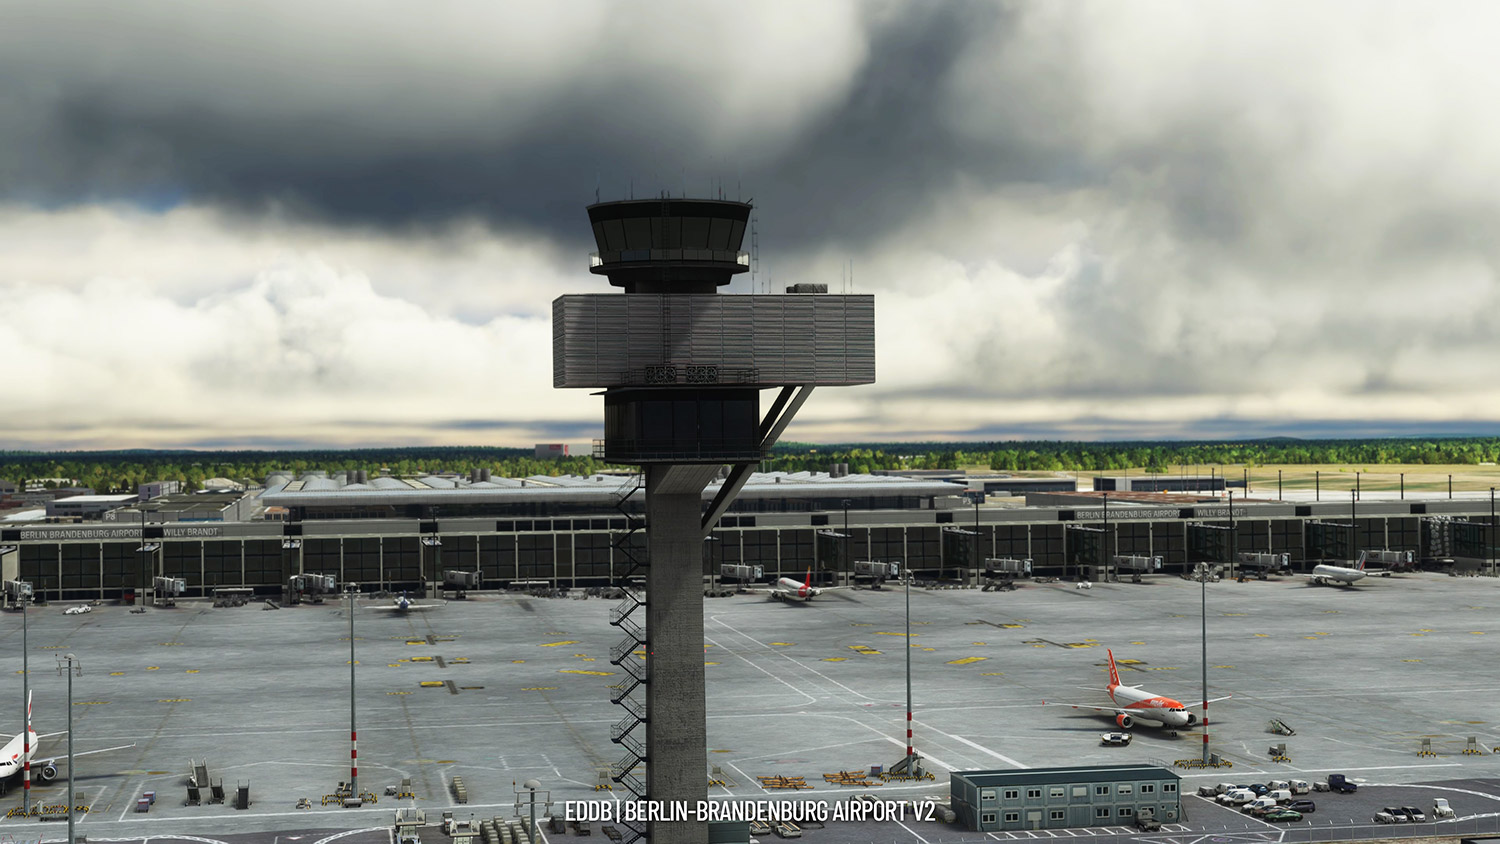 Aerosoft Mega Airport Berlin Brandenburg V2